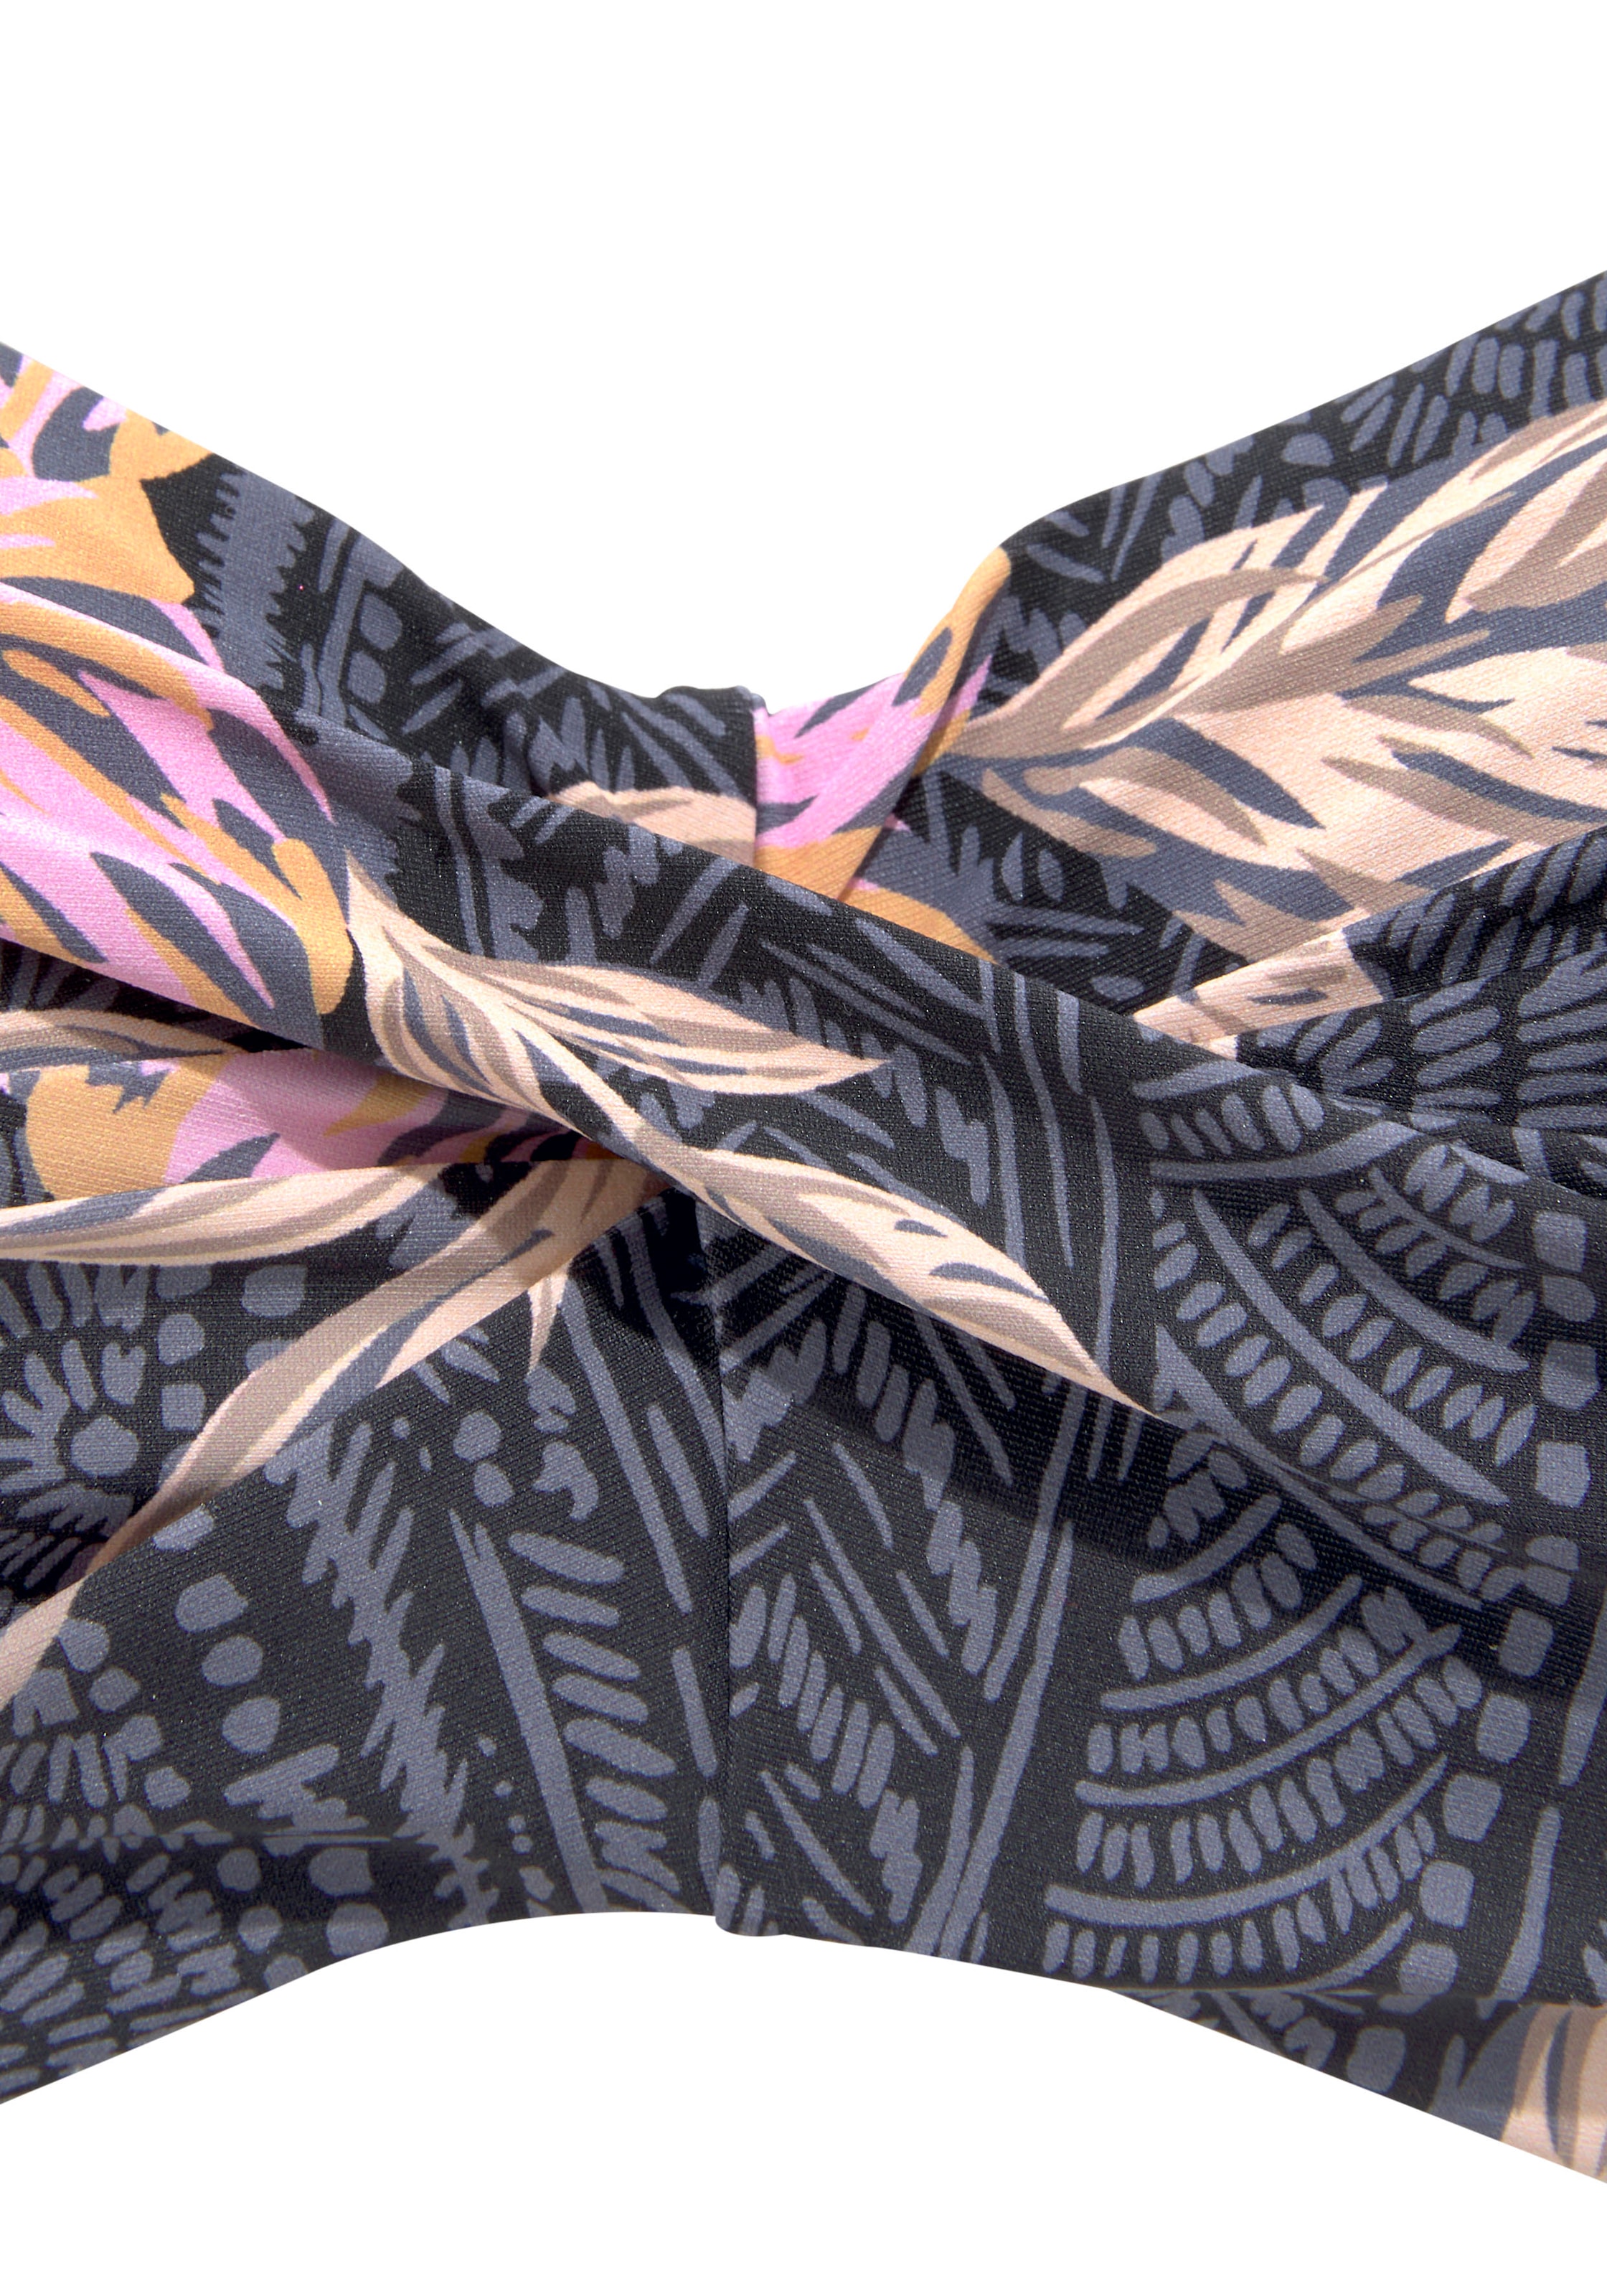 Sunseeker Bandeau-Bikini, mit grafisch-floralem Muster